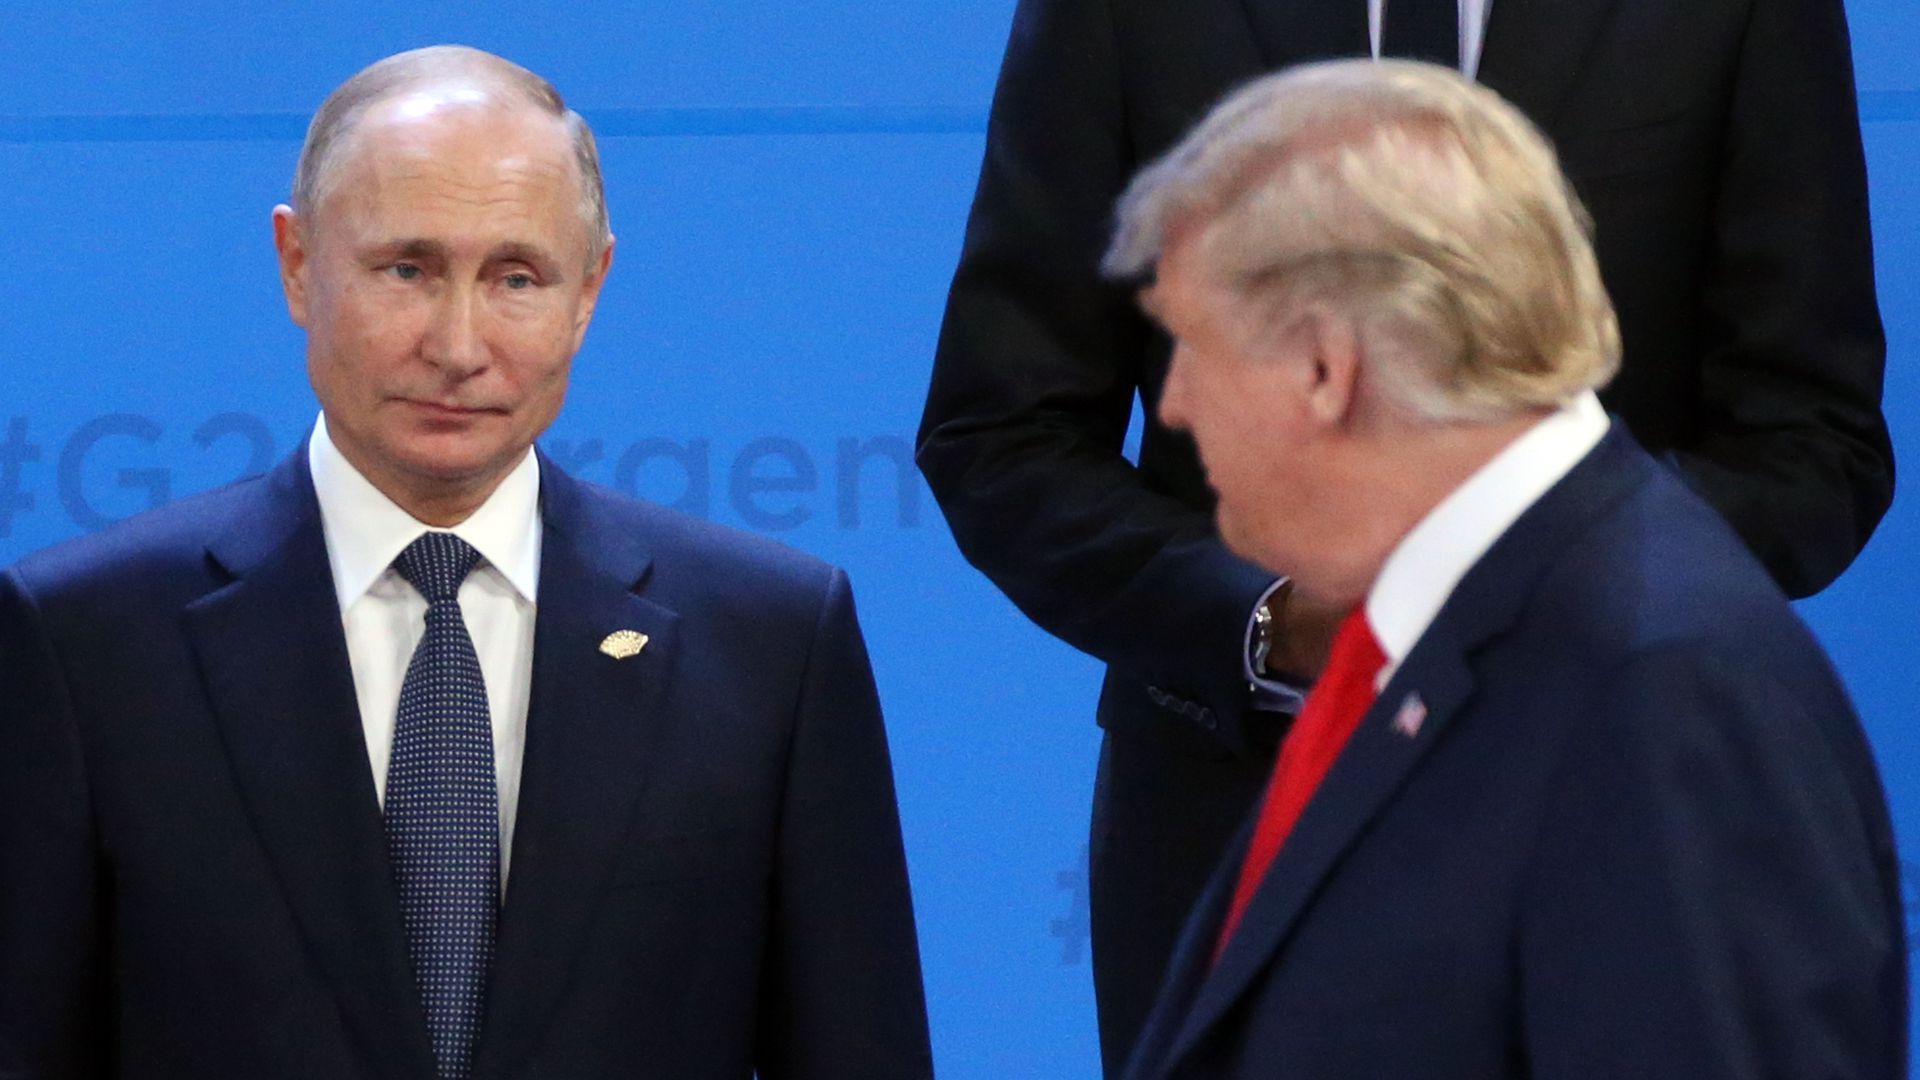 Putin on the left looks at Trump